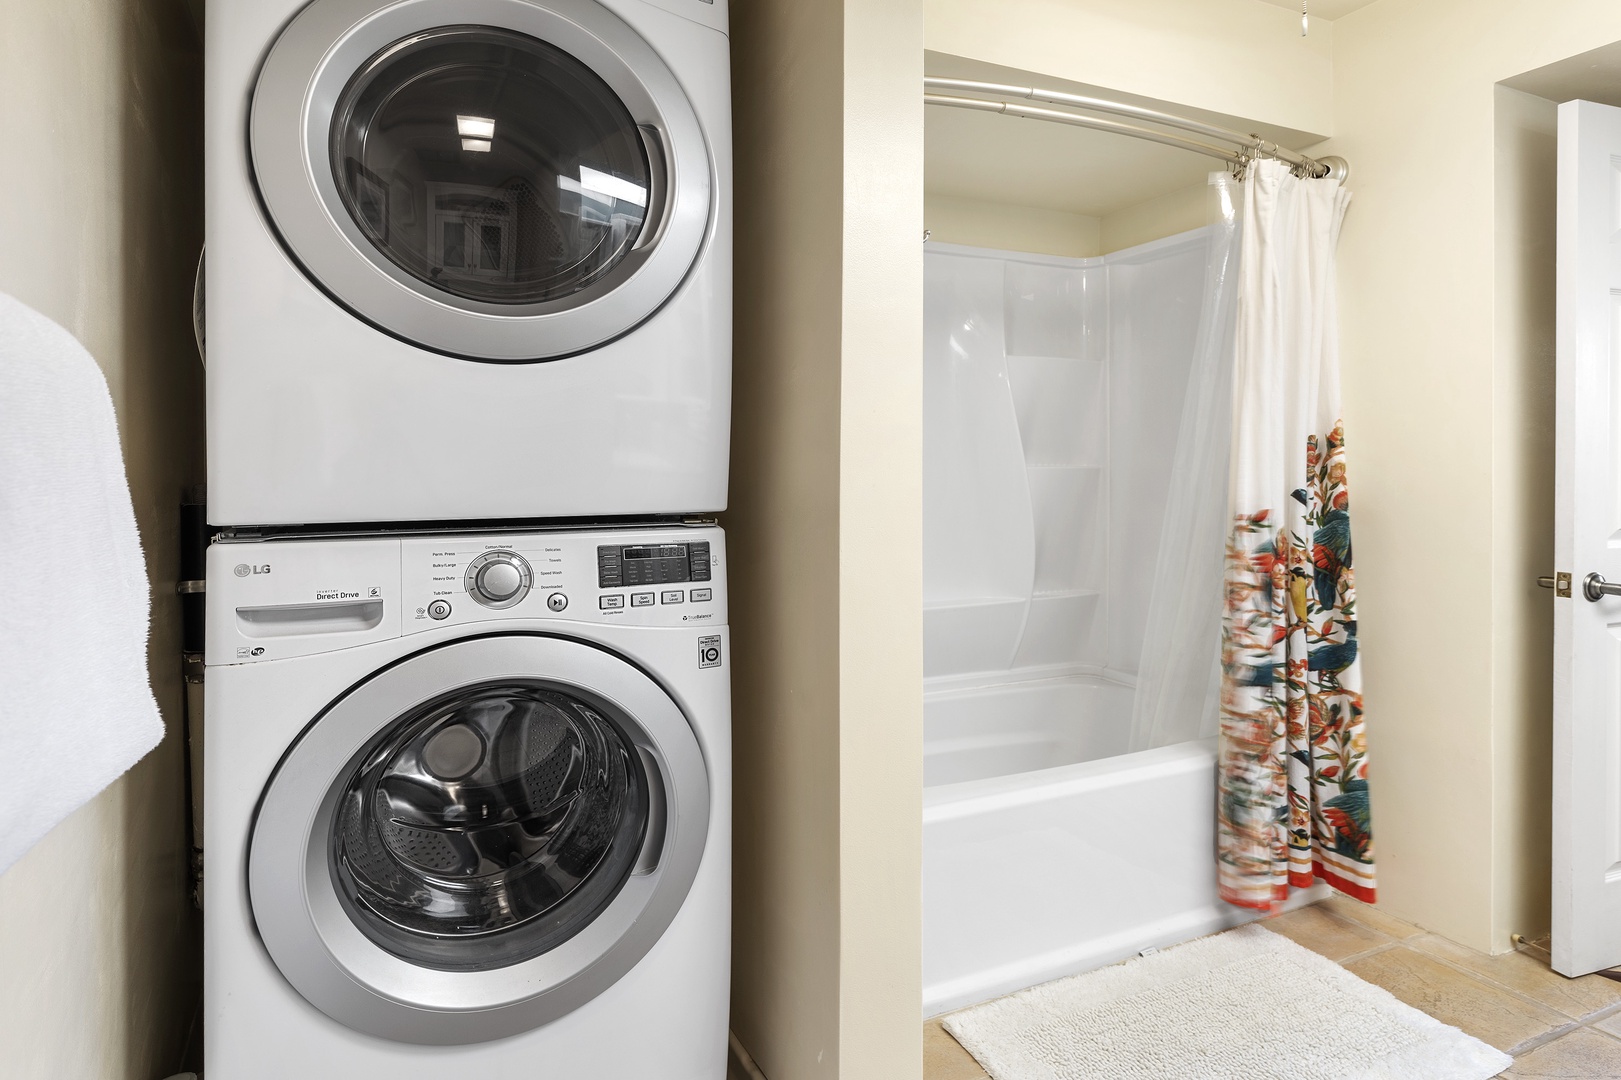 Kailua Kona Vacation Rentals, Casa De Emdeko 222 - Full sized washer dryer in unit!